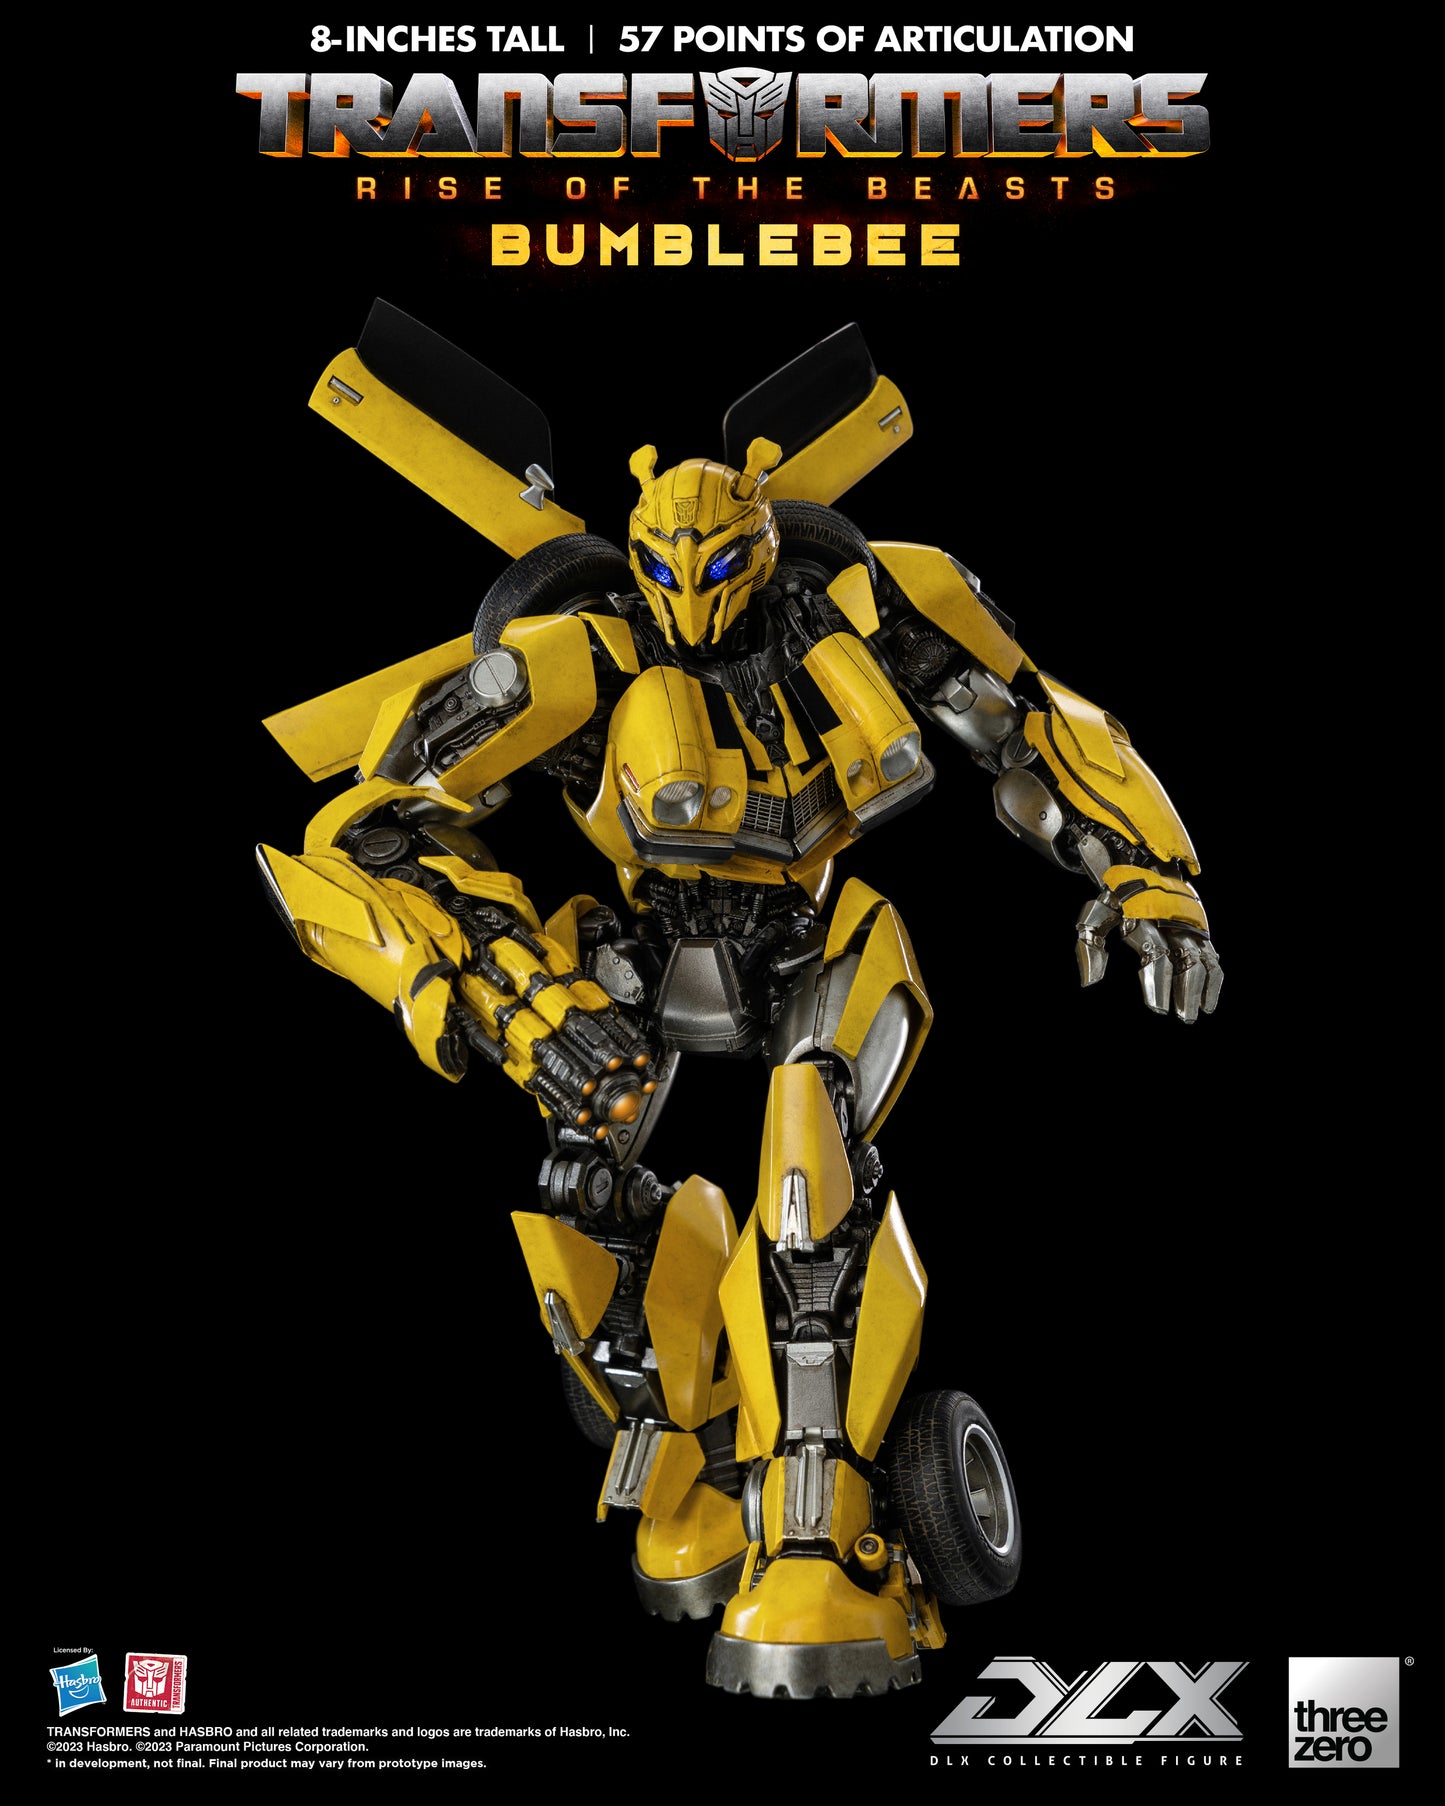 Bumblebee Transformers ROTB Threezero DLX Action Figure